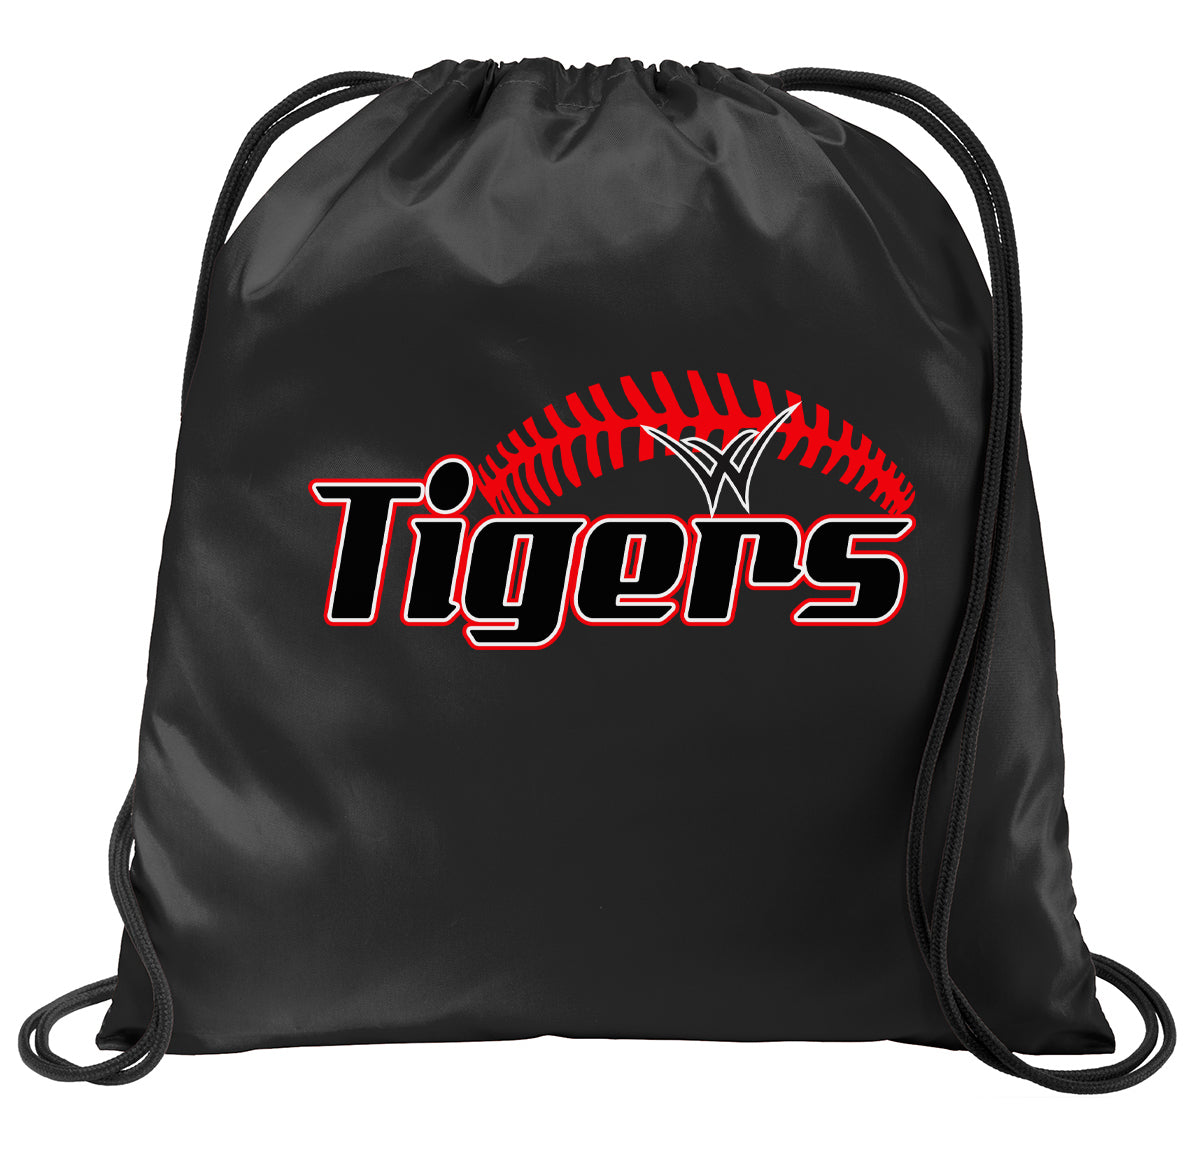 Willard Tigers Baseball Cinch Pack